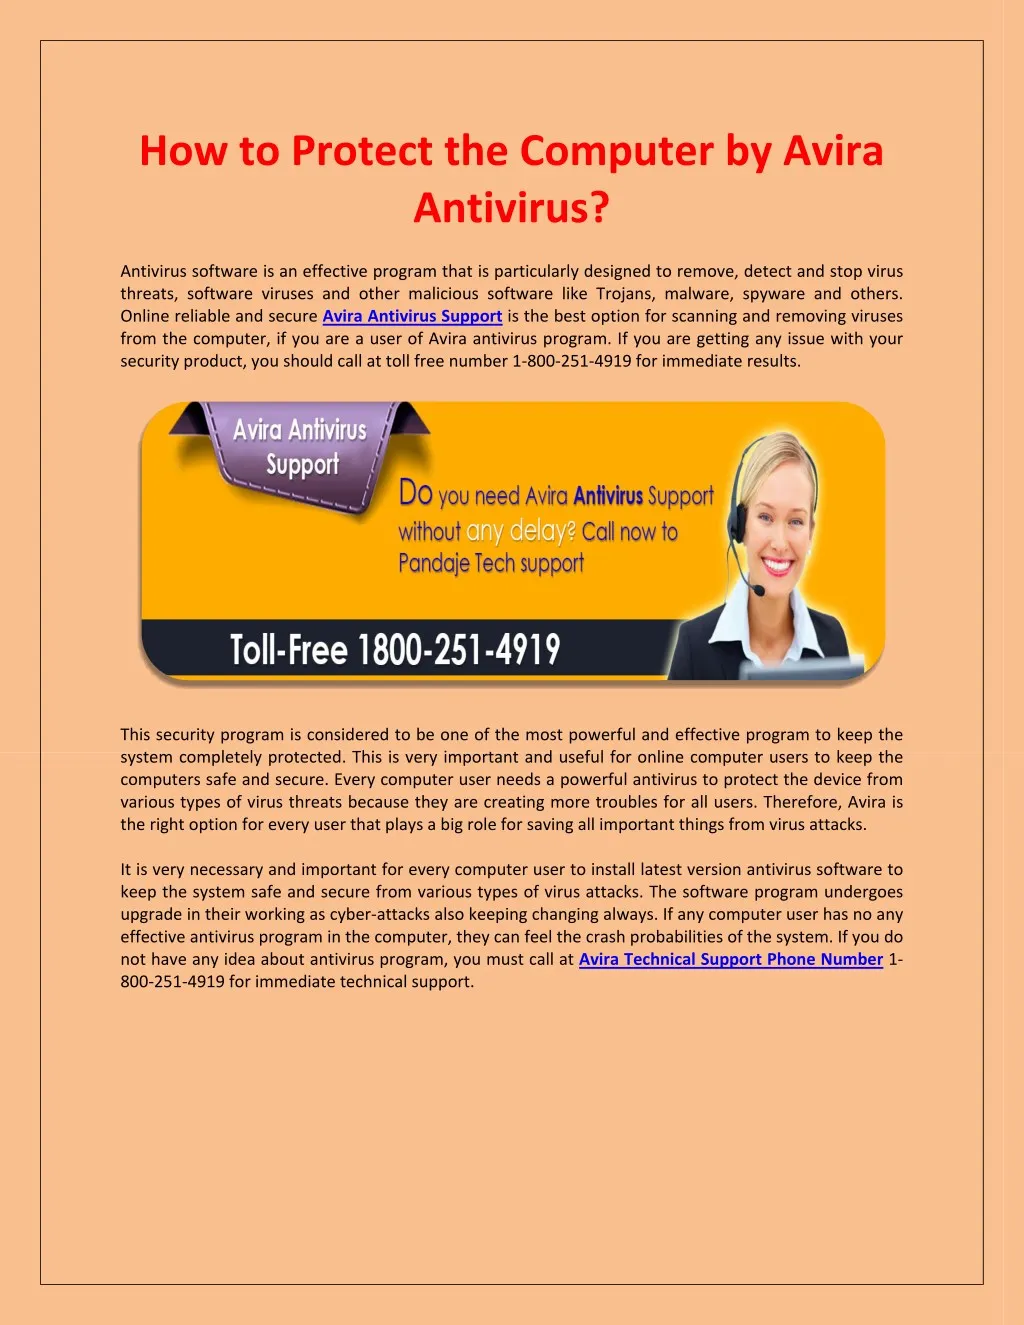 how to protect the computer by avira antivirus